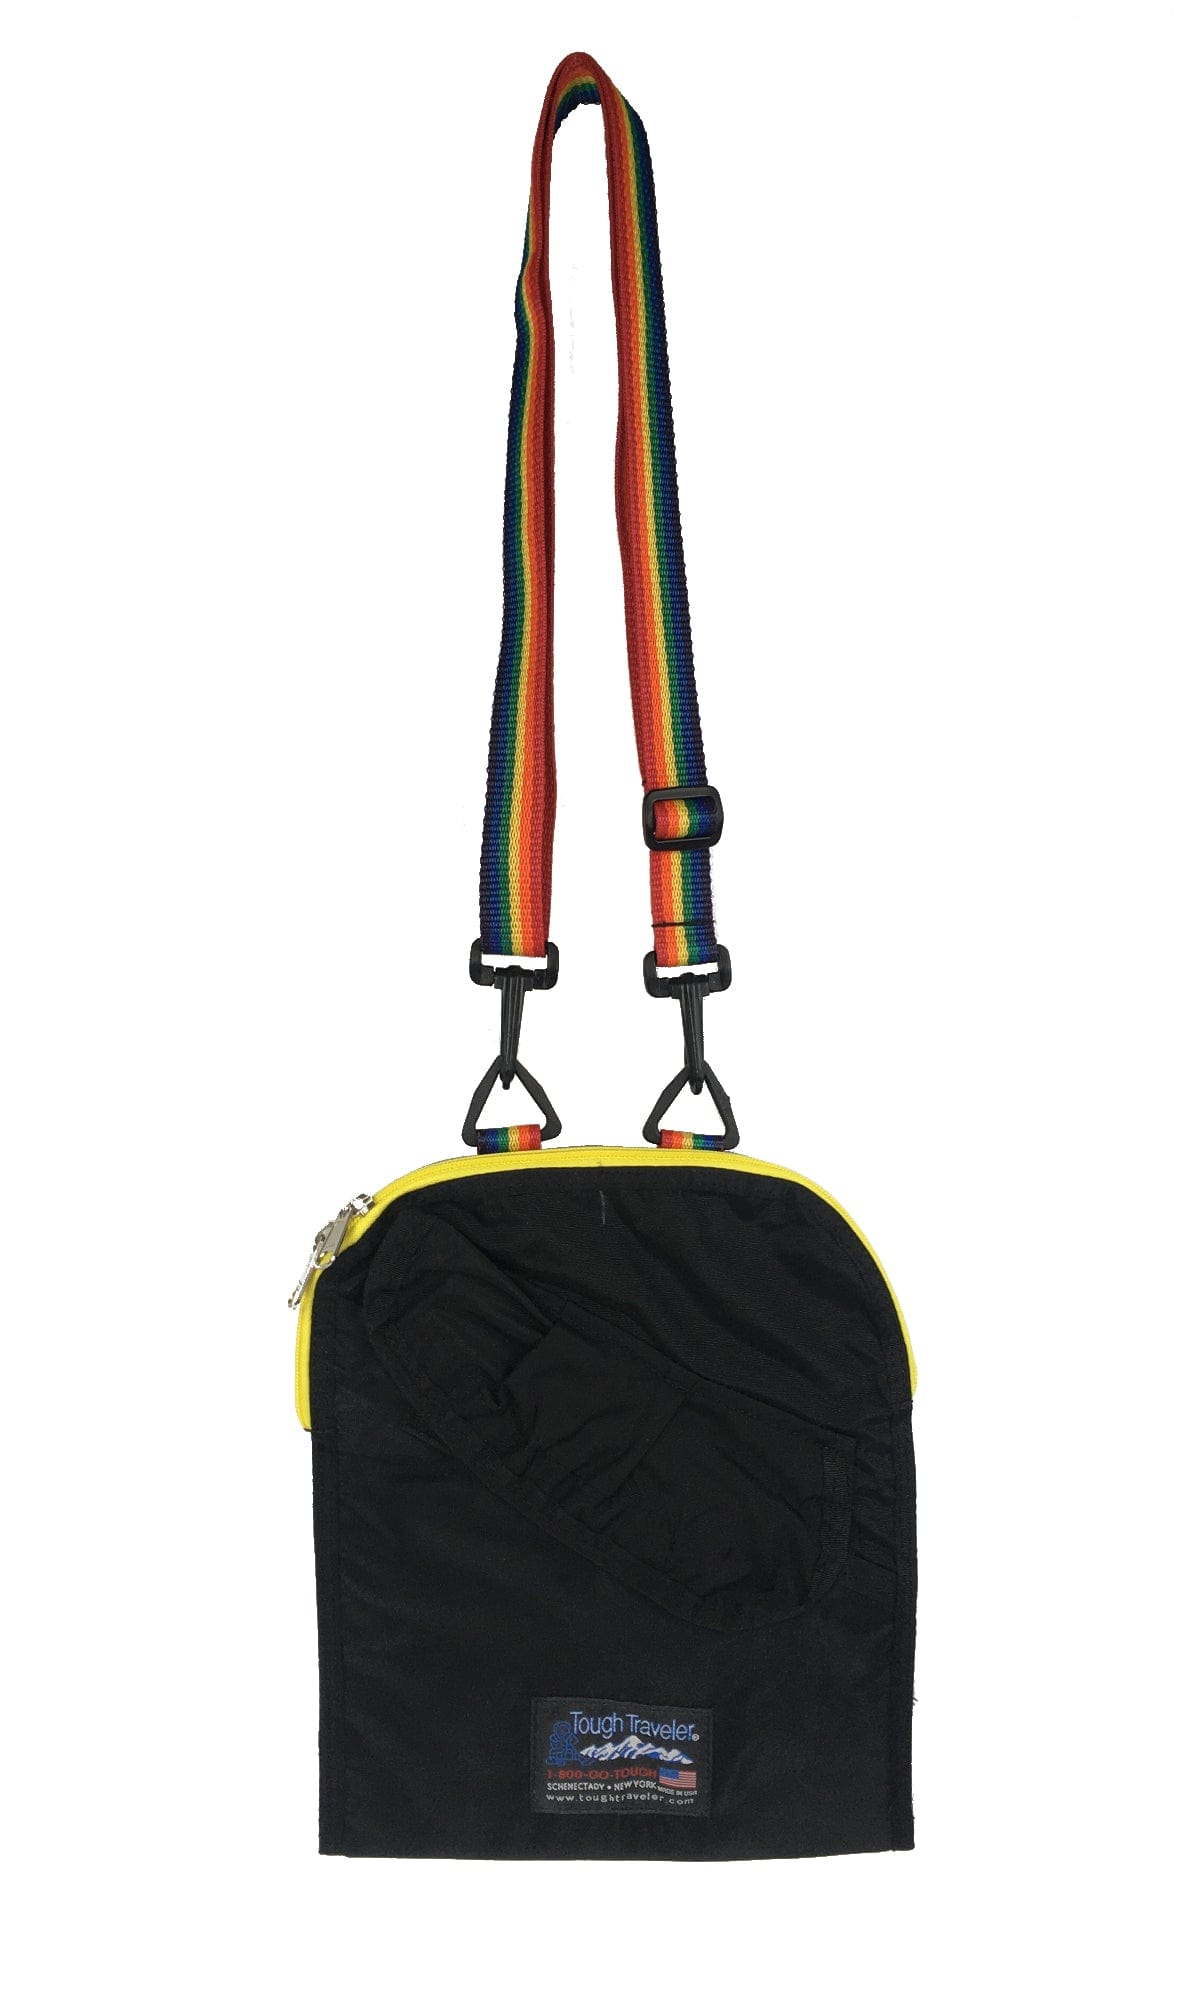 Black DAVID JONES Bag With Two Handles And Removable Shoulder Strap.